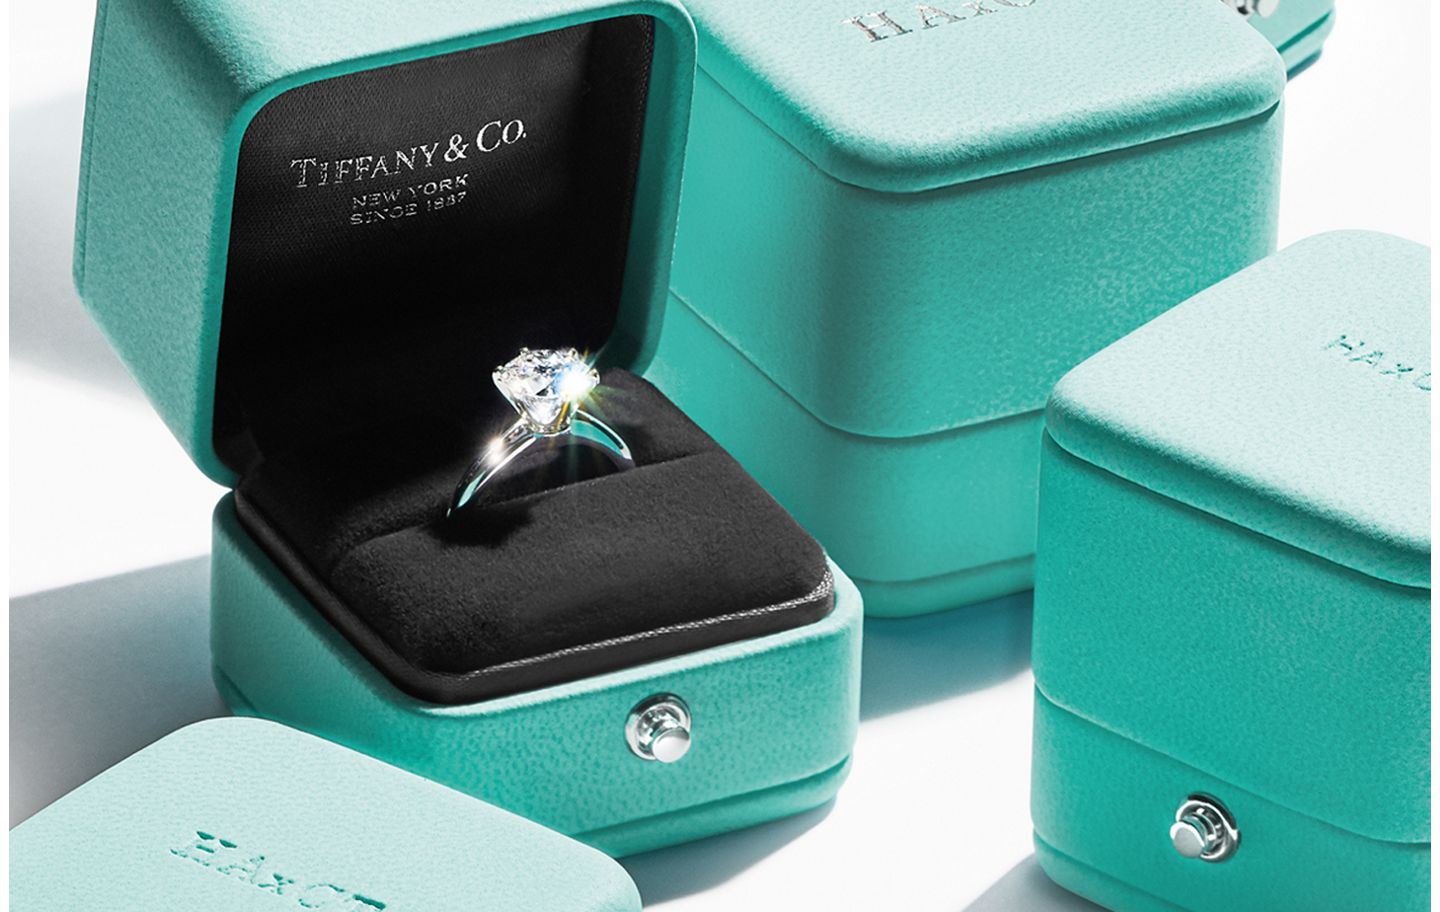 tiffany diamond rings in box